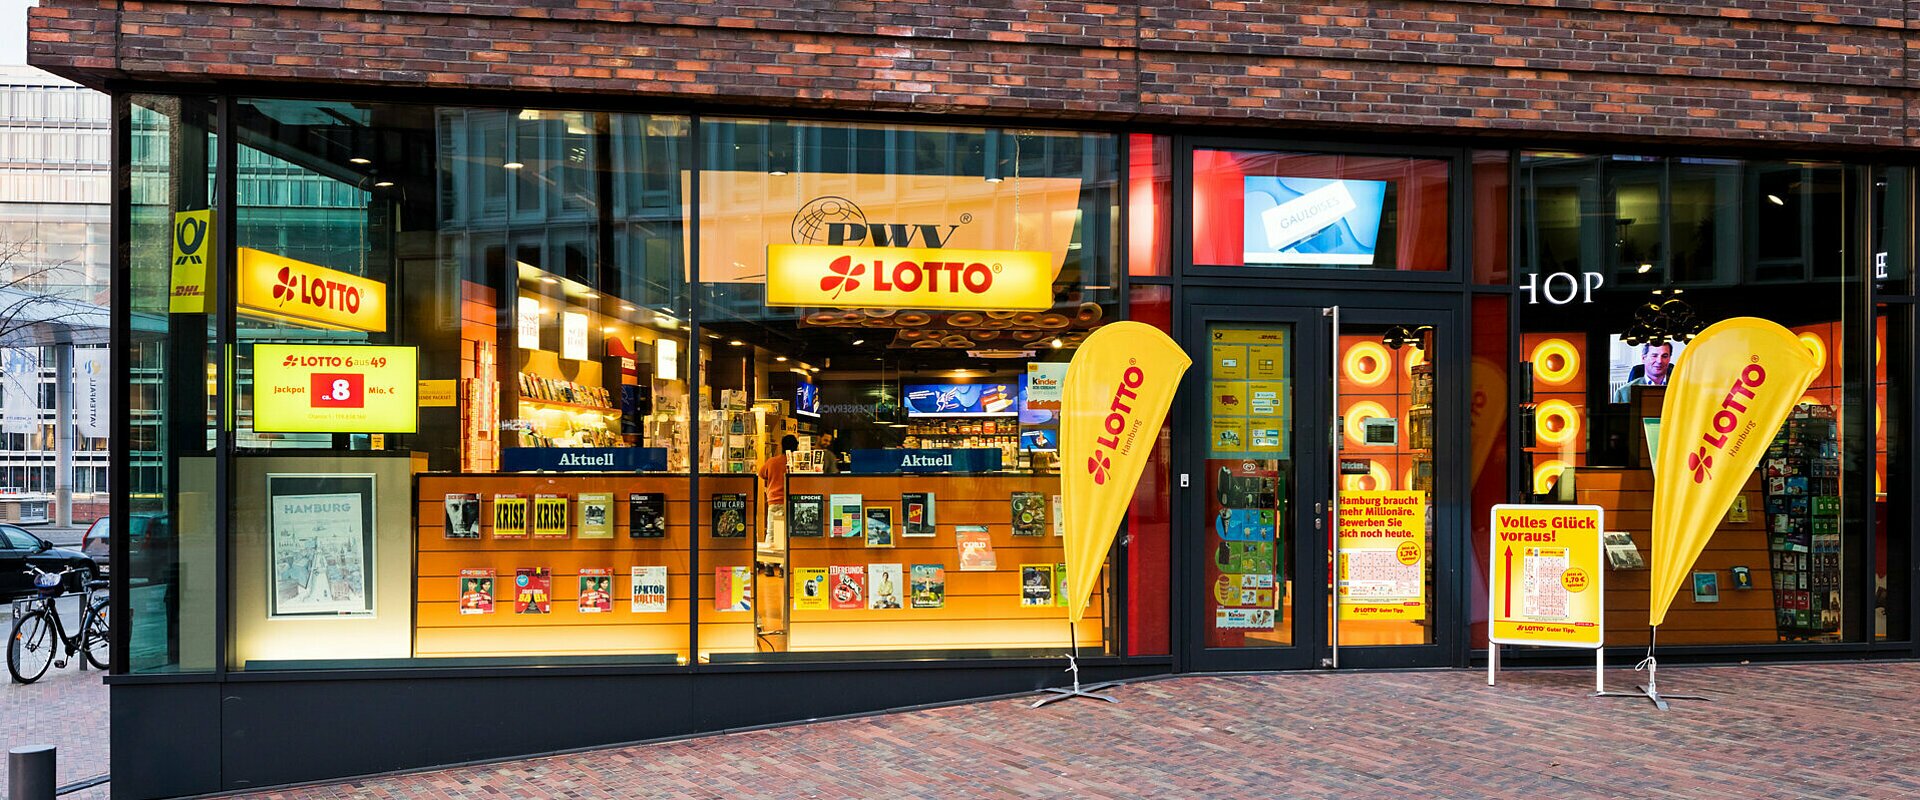 Saint Elmo's, Hamburg, Lotto, Werbeagentur, Cases 